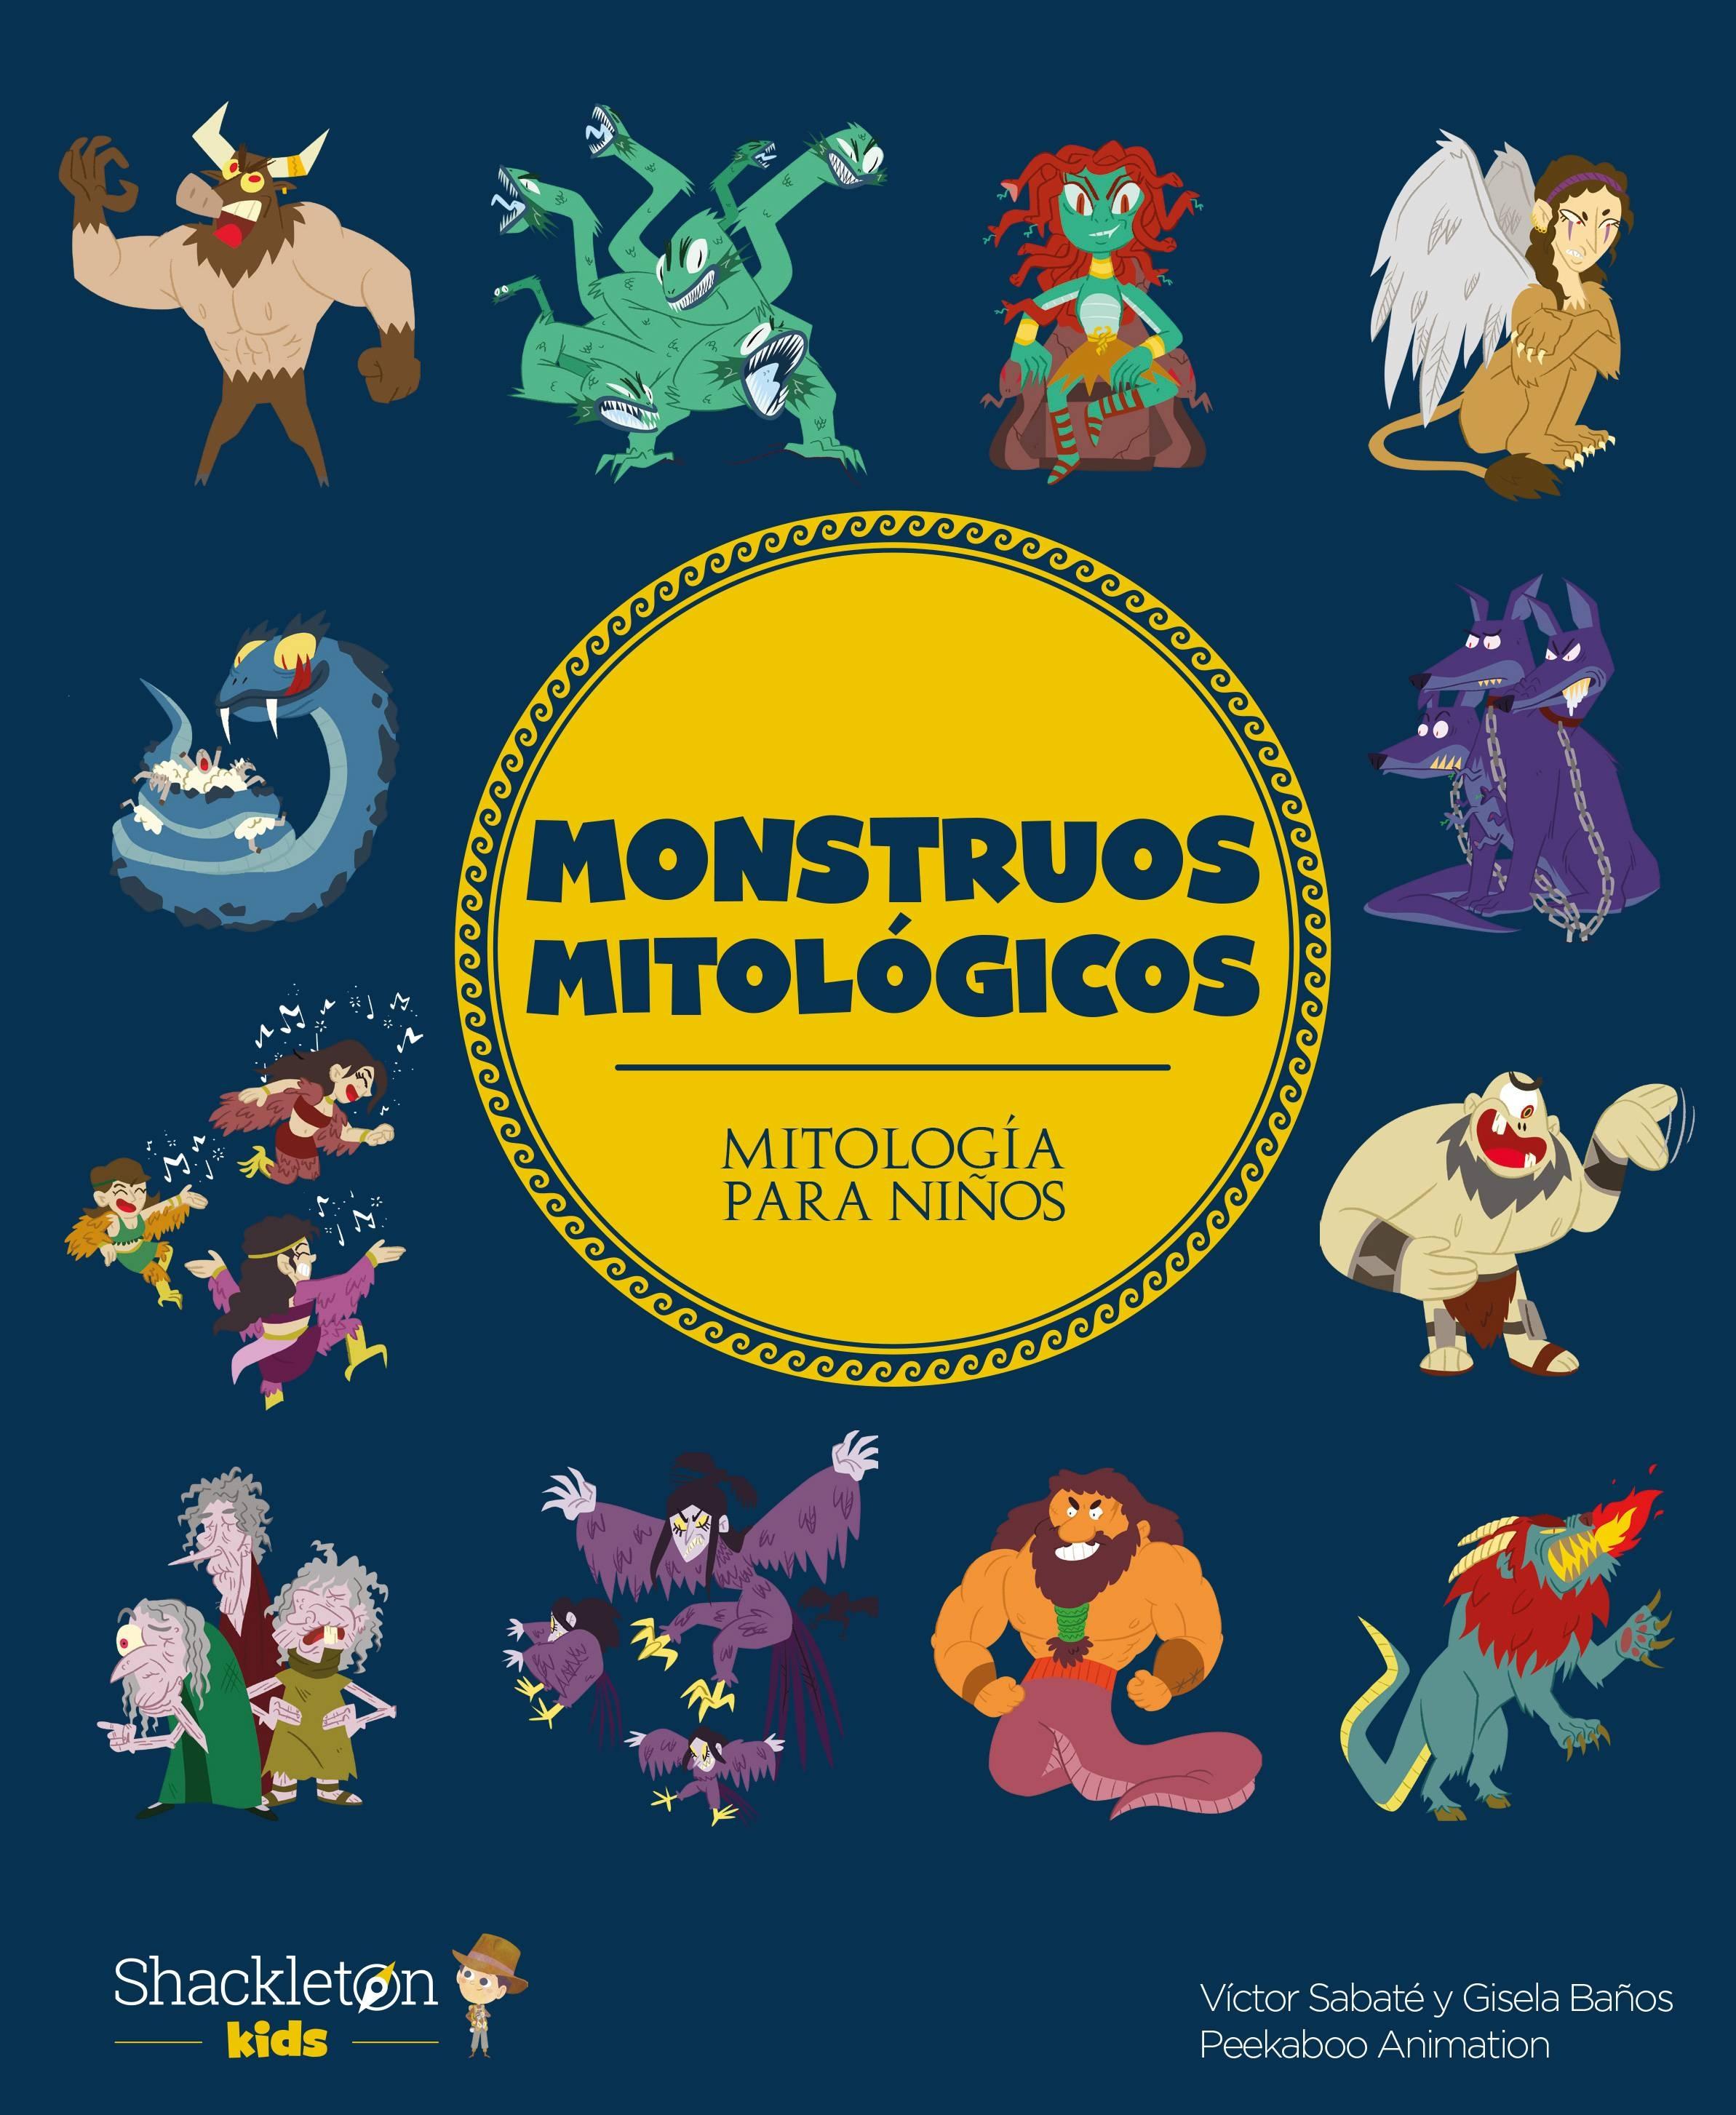 Monstruos mitológicos "Mitología para niños". 